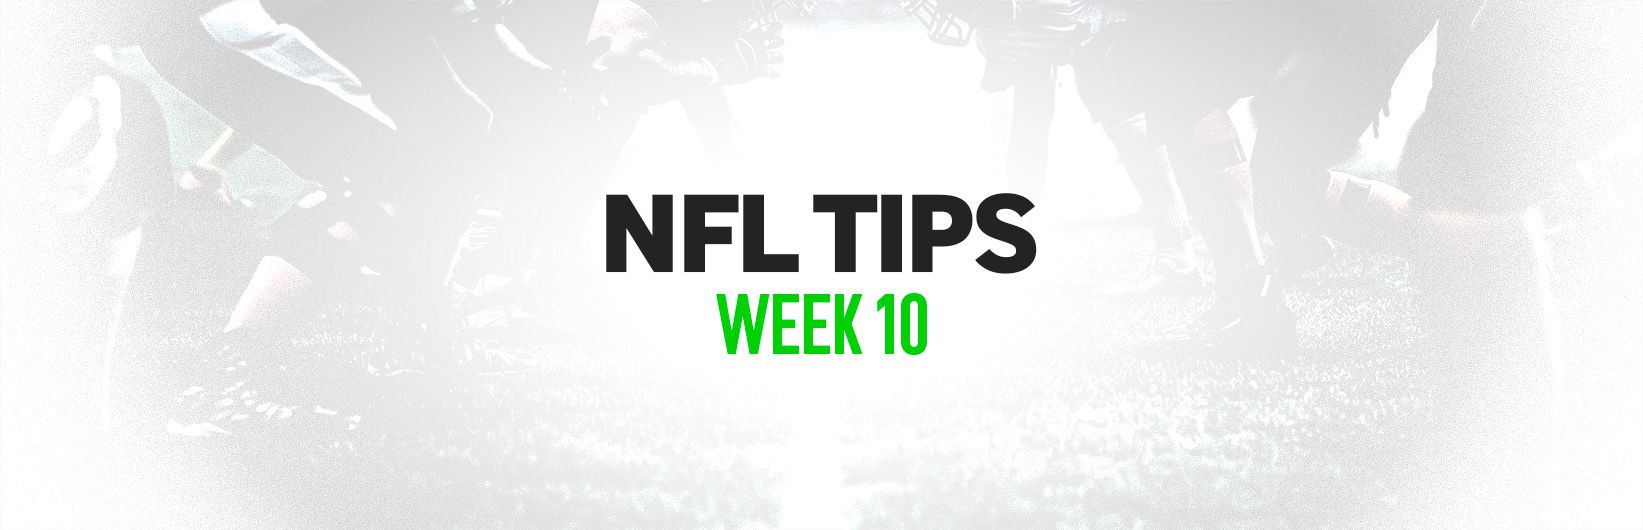 NFL tips: Best bets for Week 10